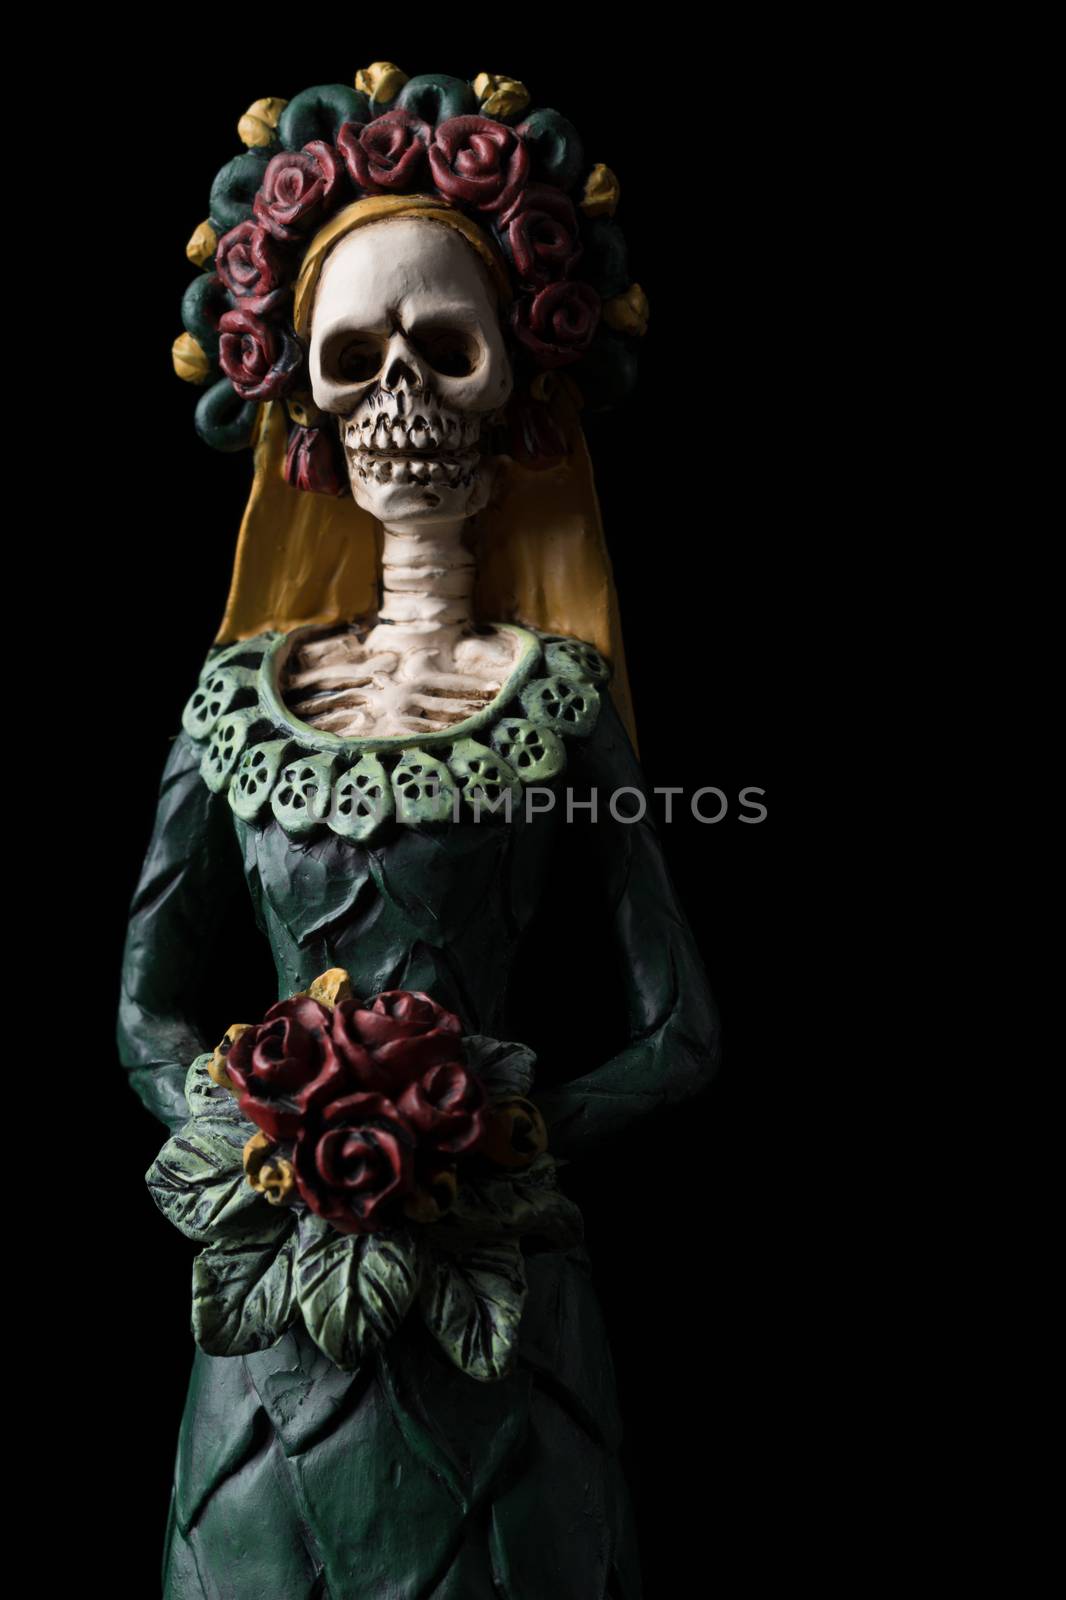 Catrina Calavera known as the "Elegant Skull" Dia de los Muertos (Day of the Dead) celebration